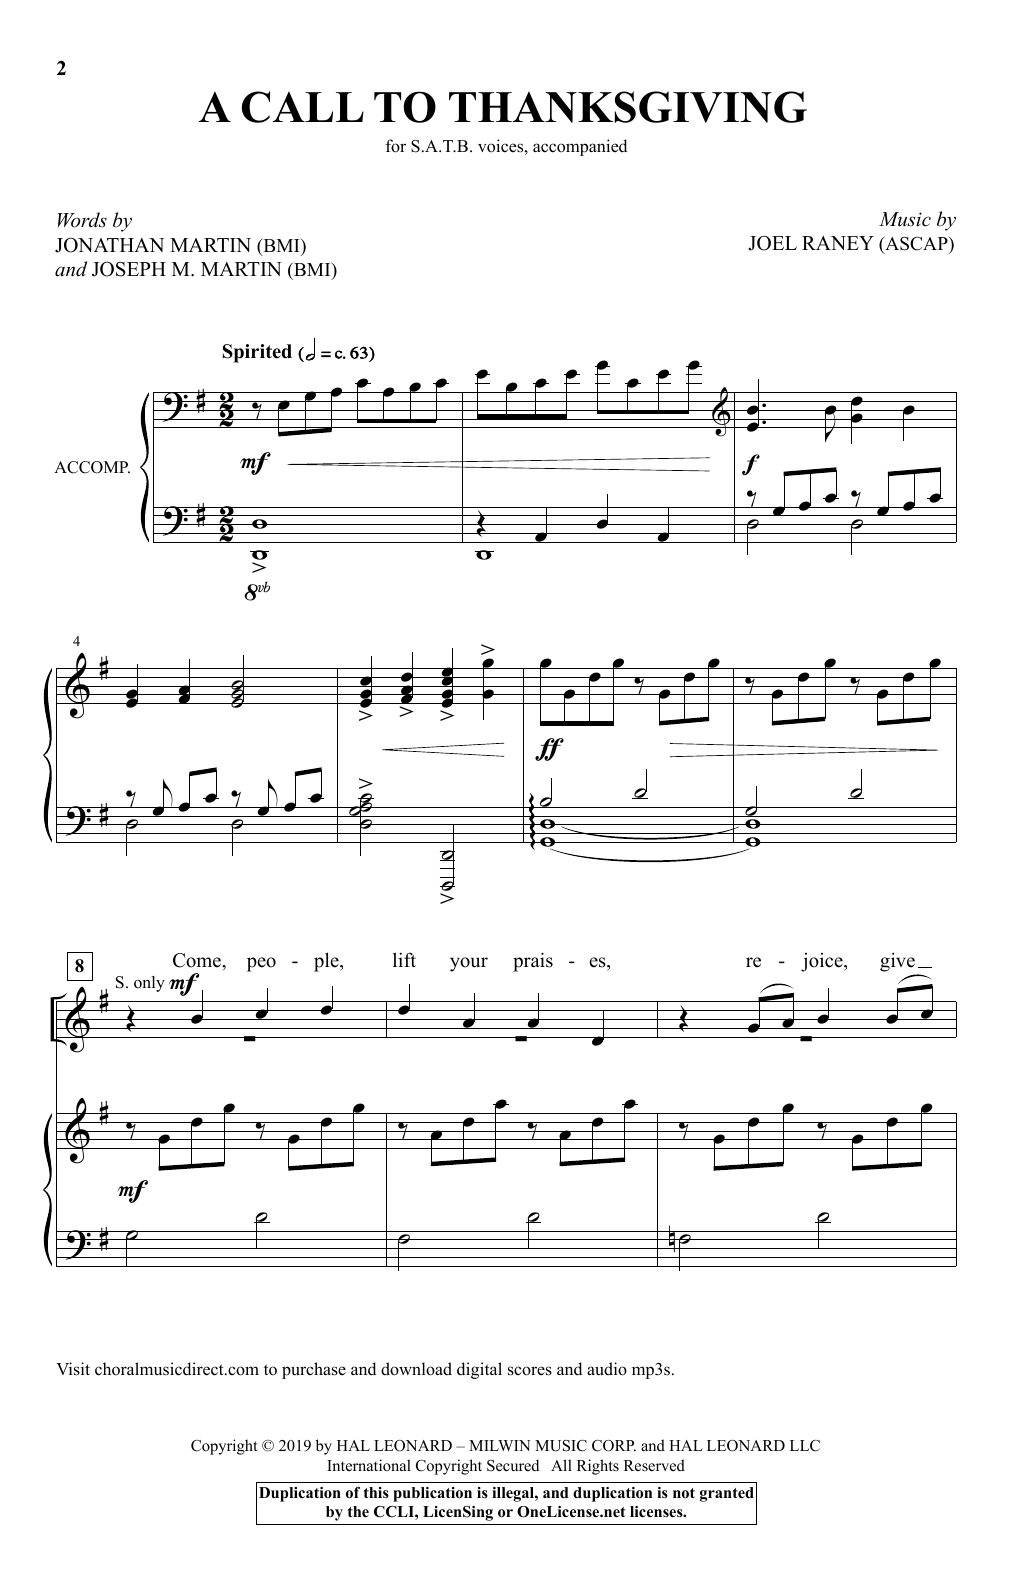 Joseph M. Martin A Call To Thanksgiving Sheet Music Notes & Chords for SATB Choir - Download or Print PDF